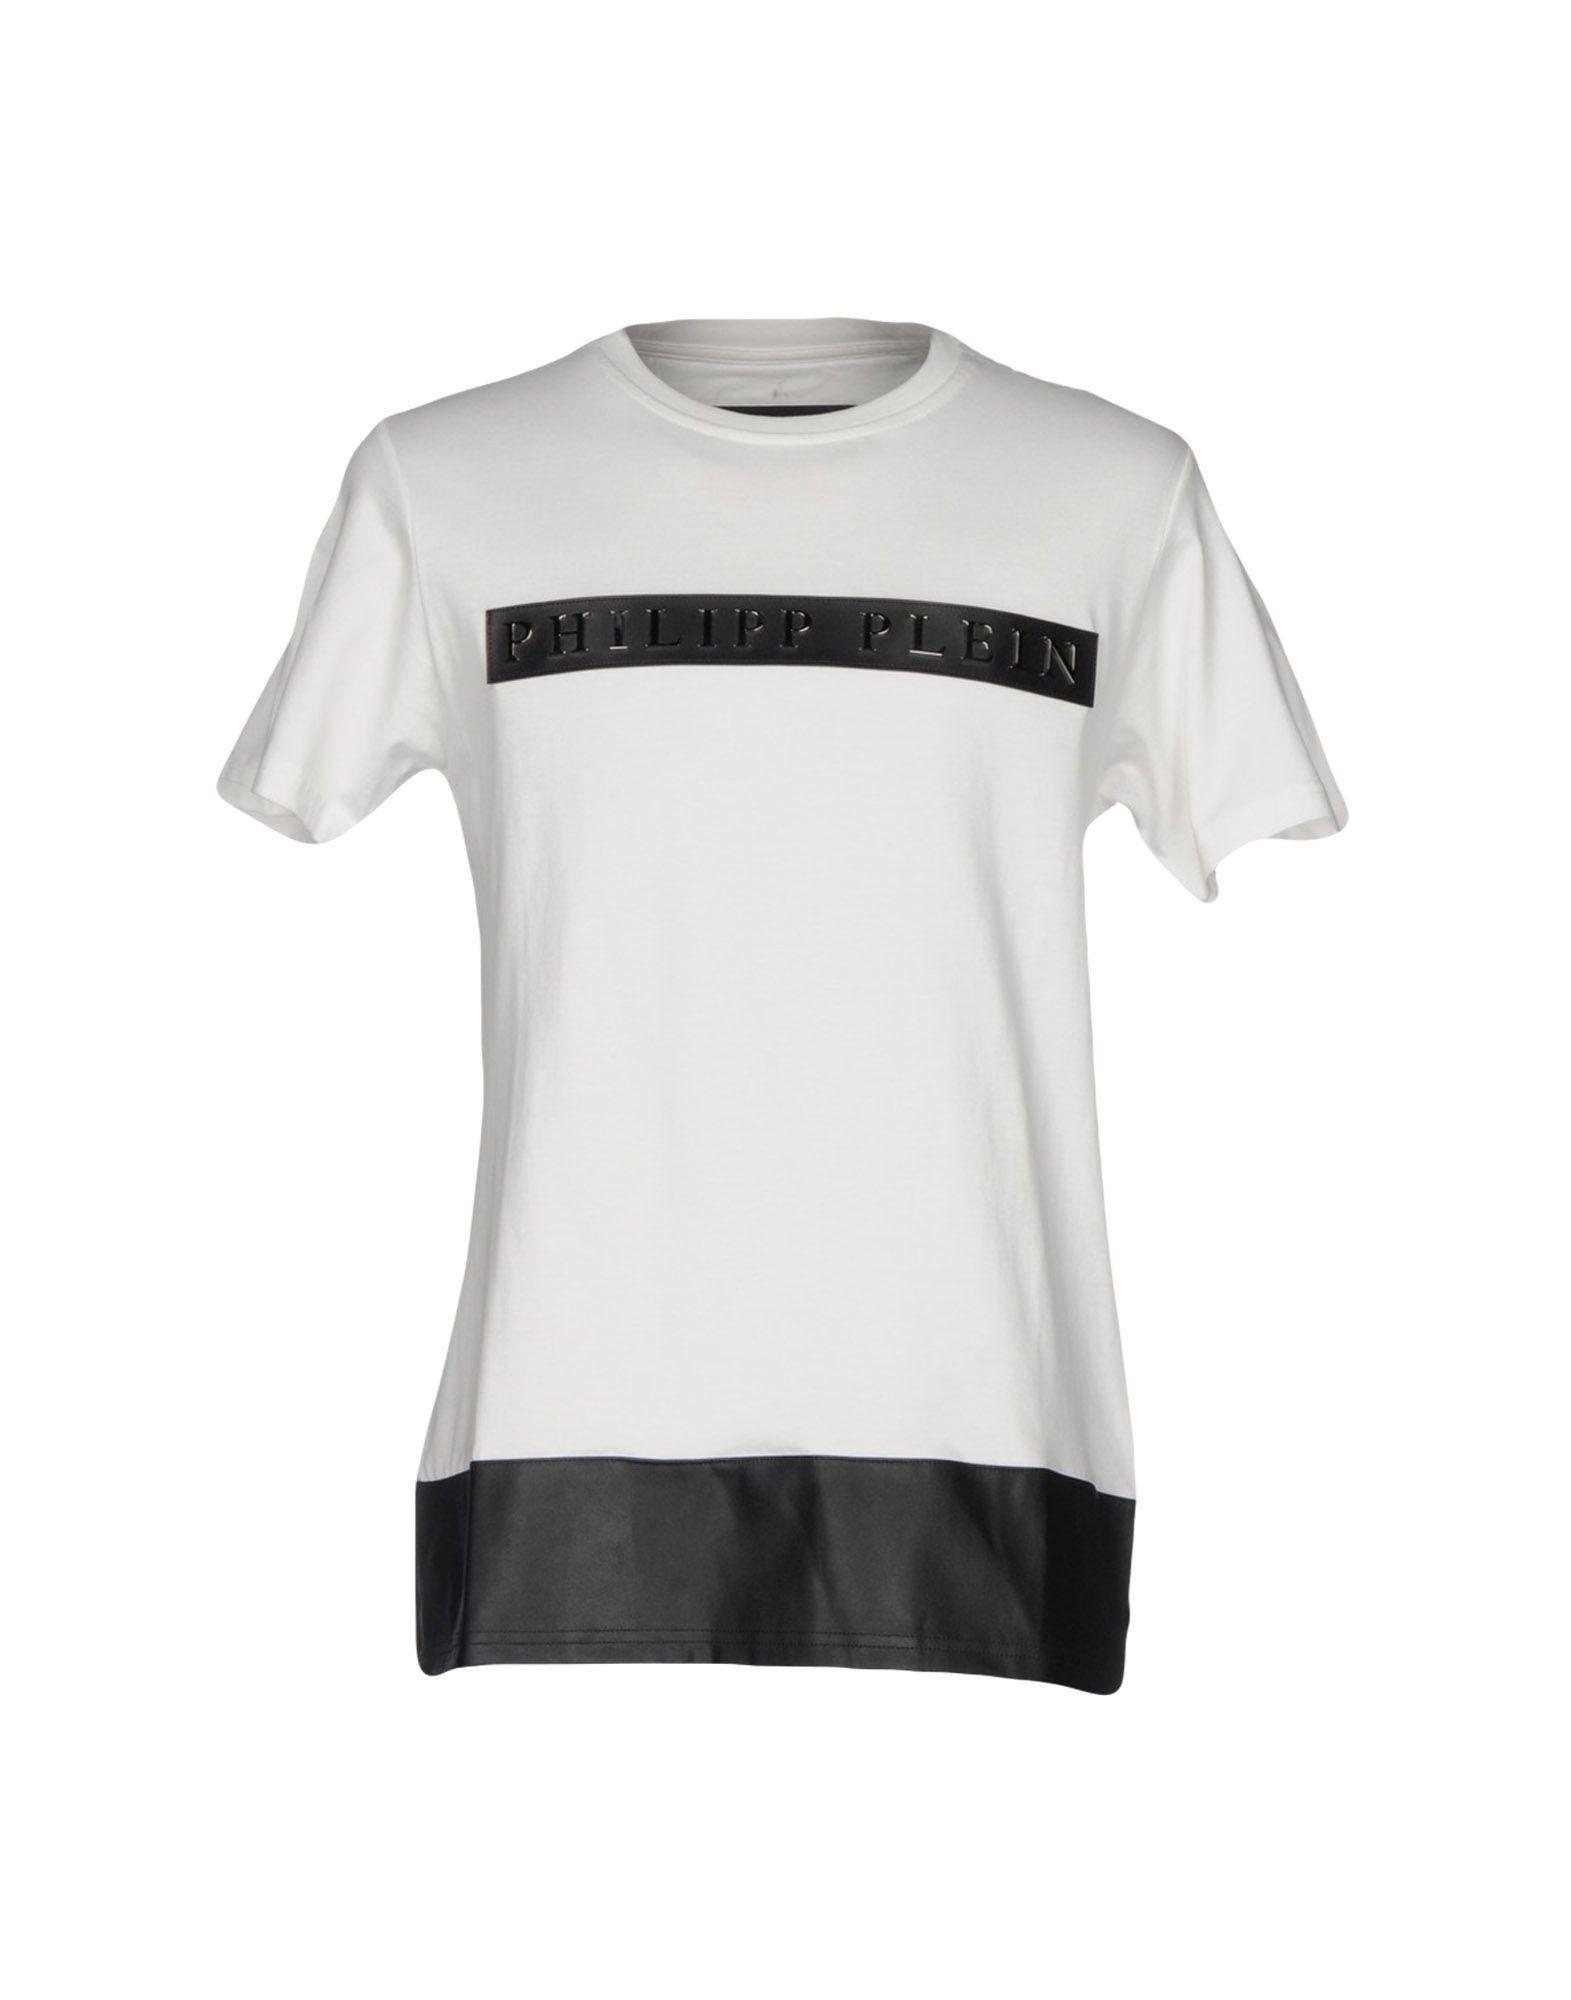 Philipp Plein T-shirt in White for Men - Lyst